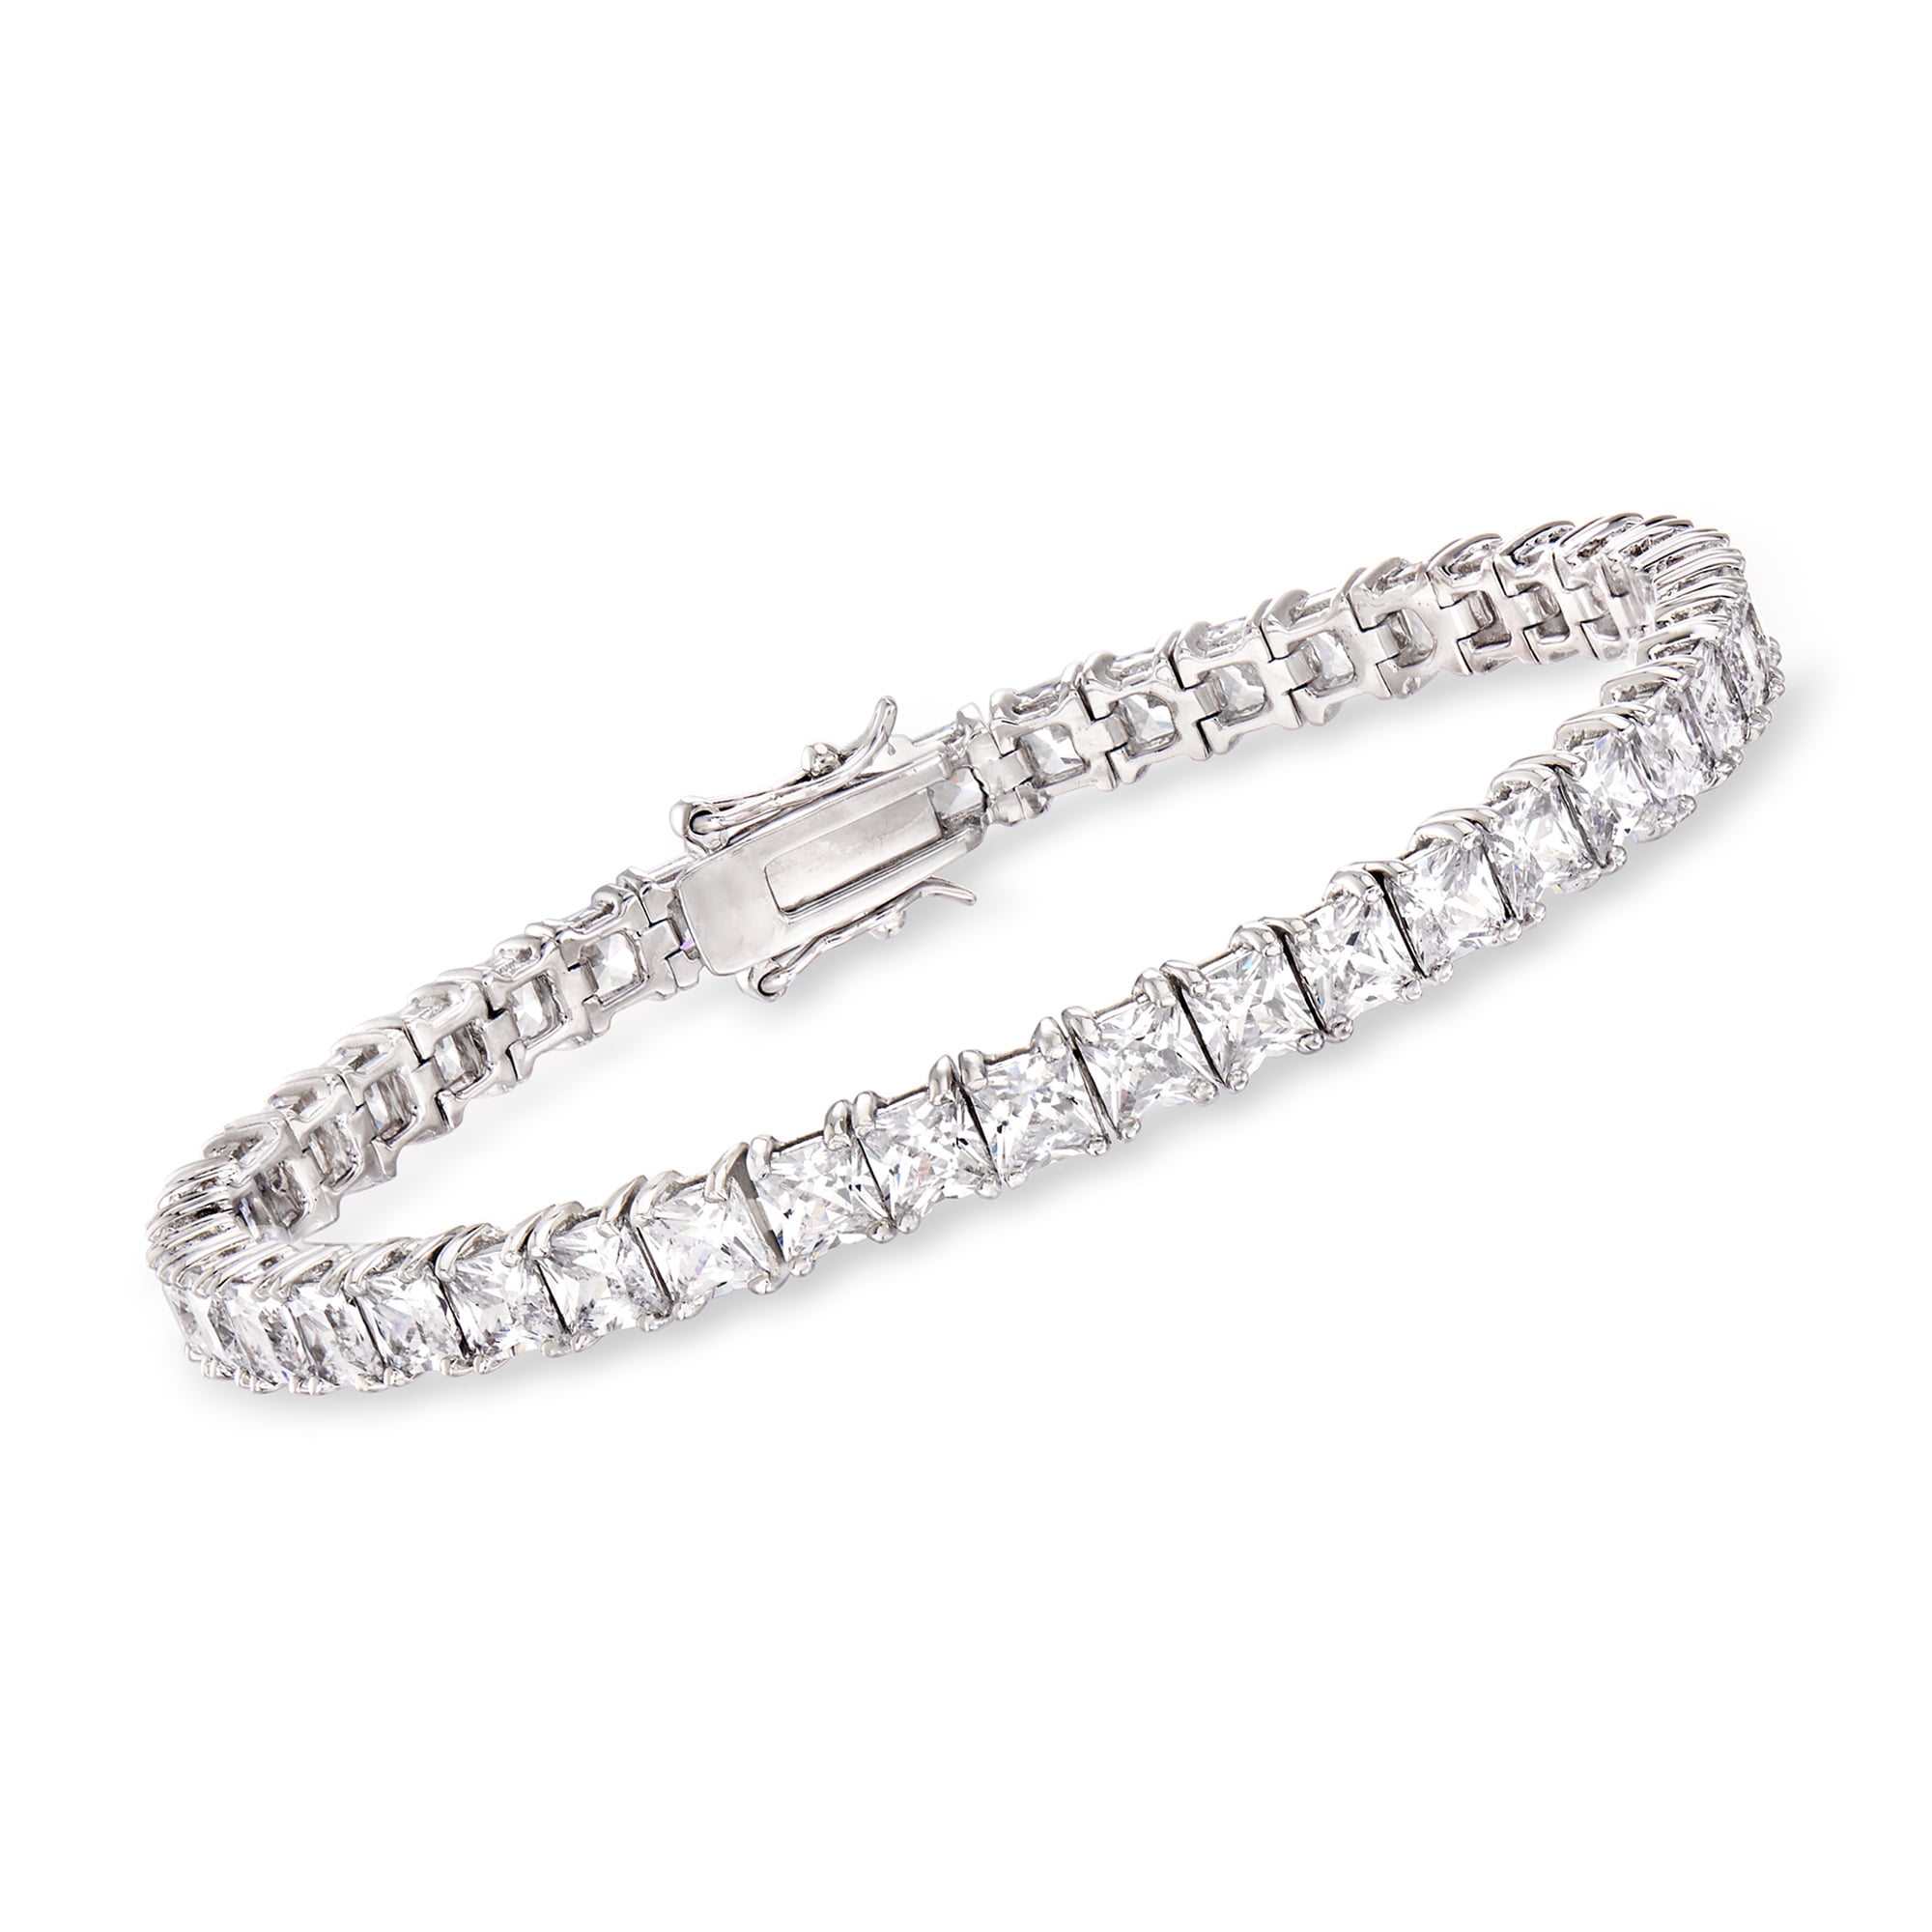 Ladies wide bracelet cz cubic zirconia silver statement 7 inch new sparkle 2019